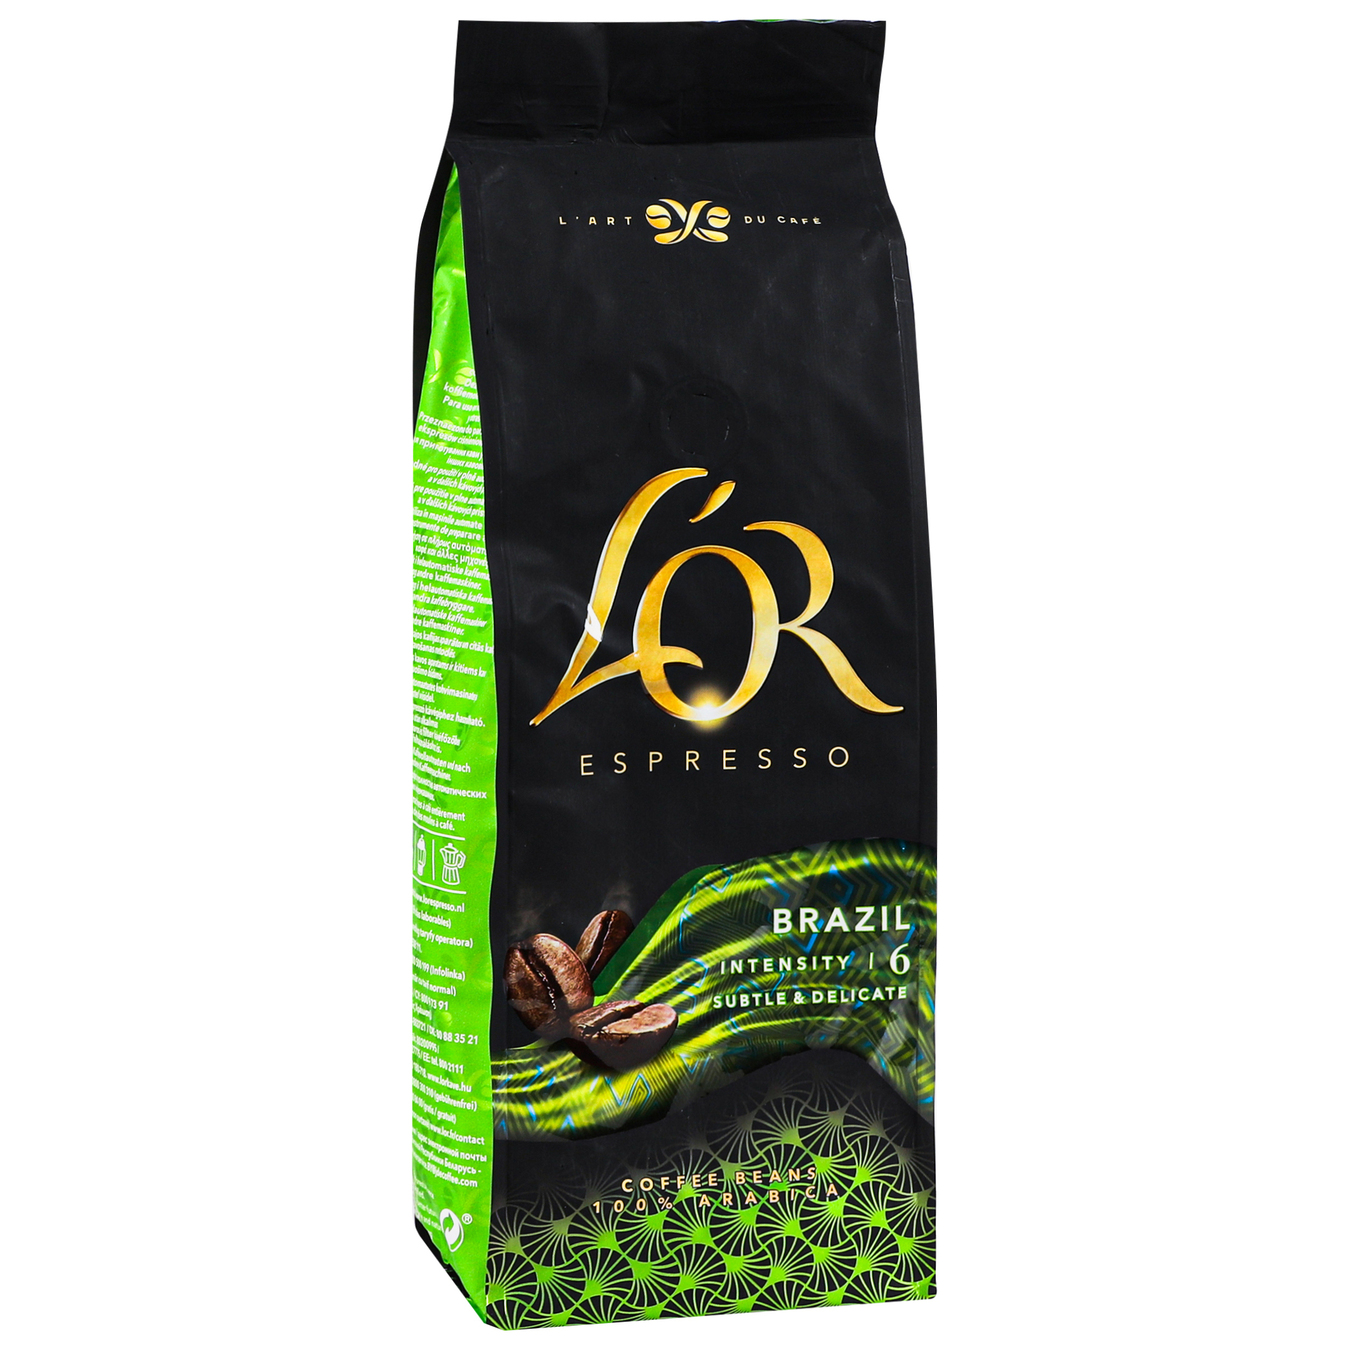 L'or Espresso Brazil Coffee Beans 500g 3